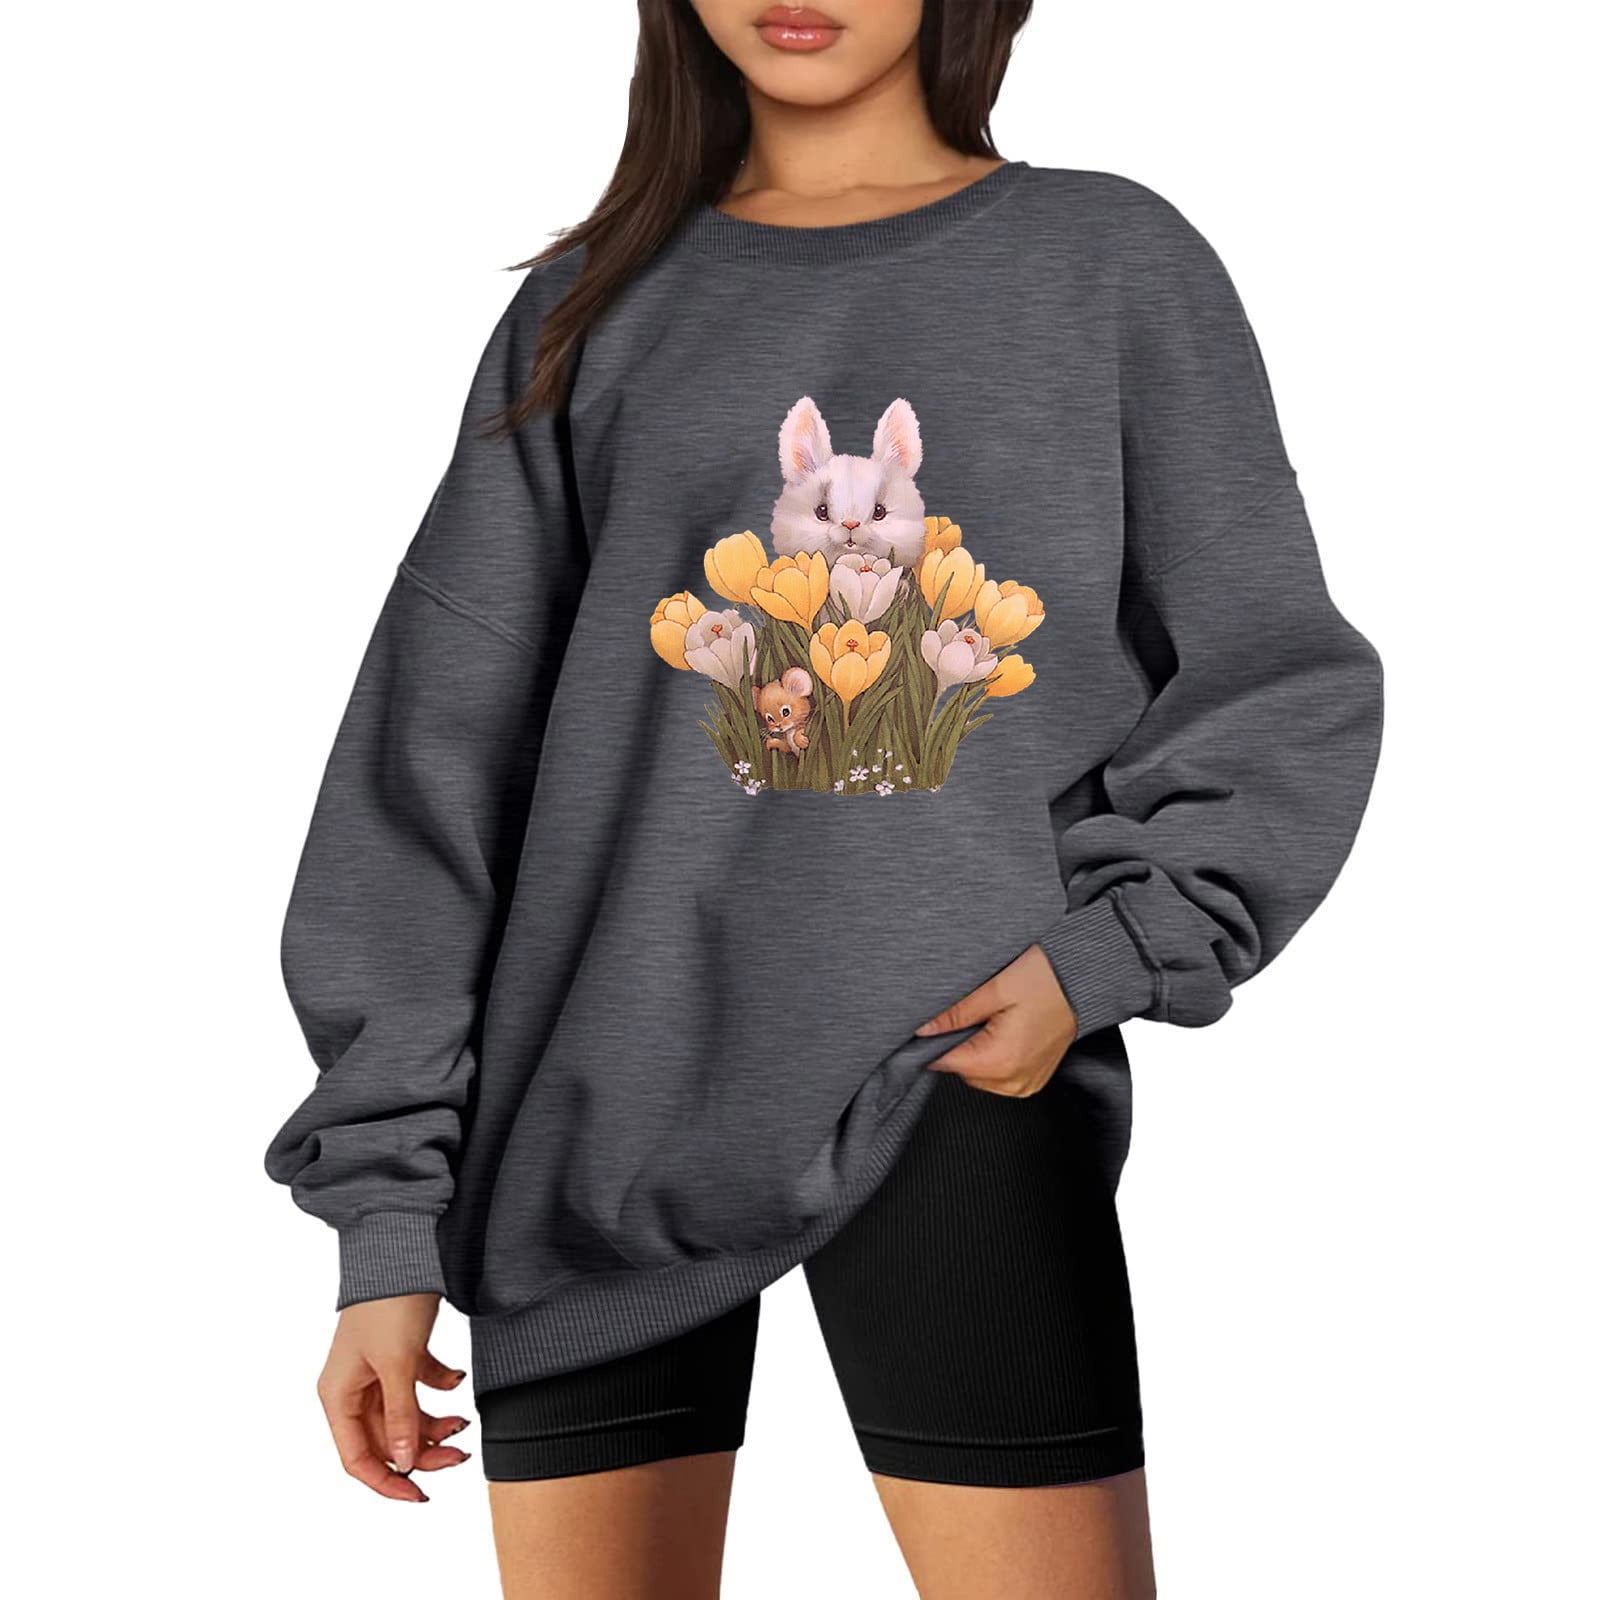 Yyeselk Oversized Sweatshirts for Women Fleece Crewneck Pullover Comfy  Clothes Rabbit Graphic Print Loose Sweater Blouse Tee Shirts Tshirts  Tops,Dark Gray XXL 